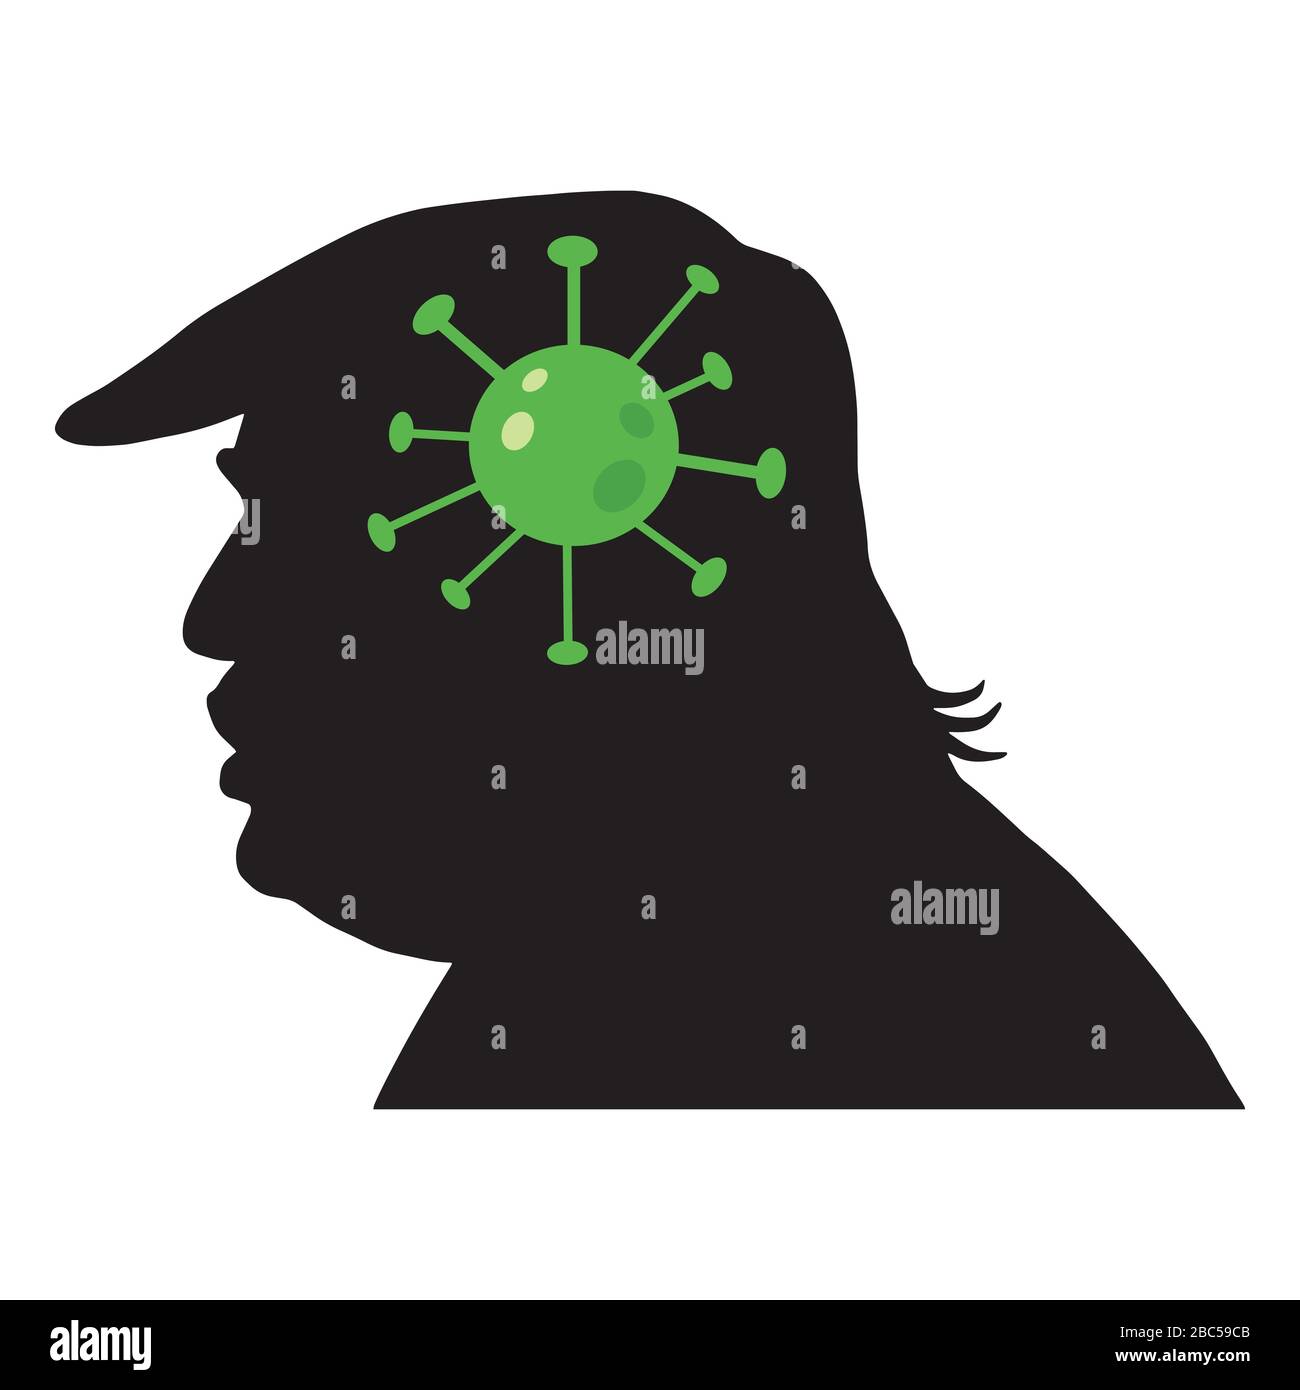 Donald Trump Silhouette Coronavirus COVID-19. Vector Icon Illustration. Washington DC, April 2, 2020 Stock Vector